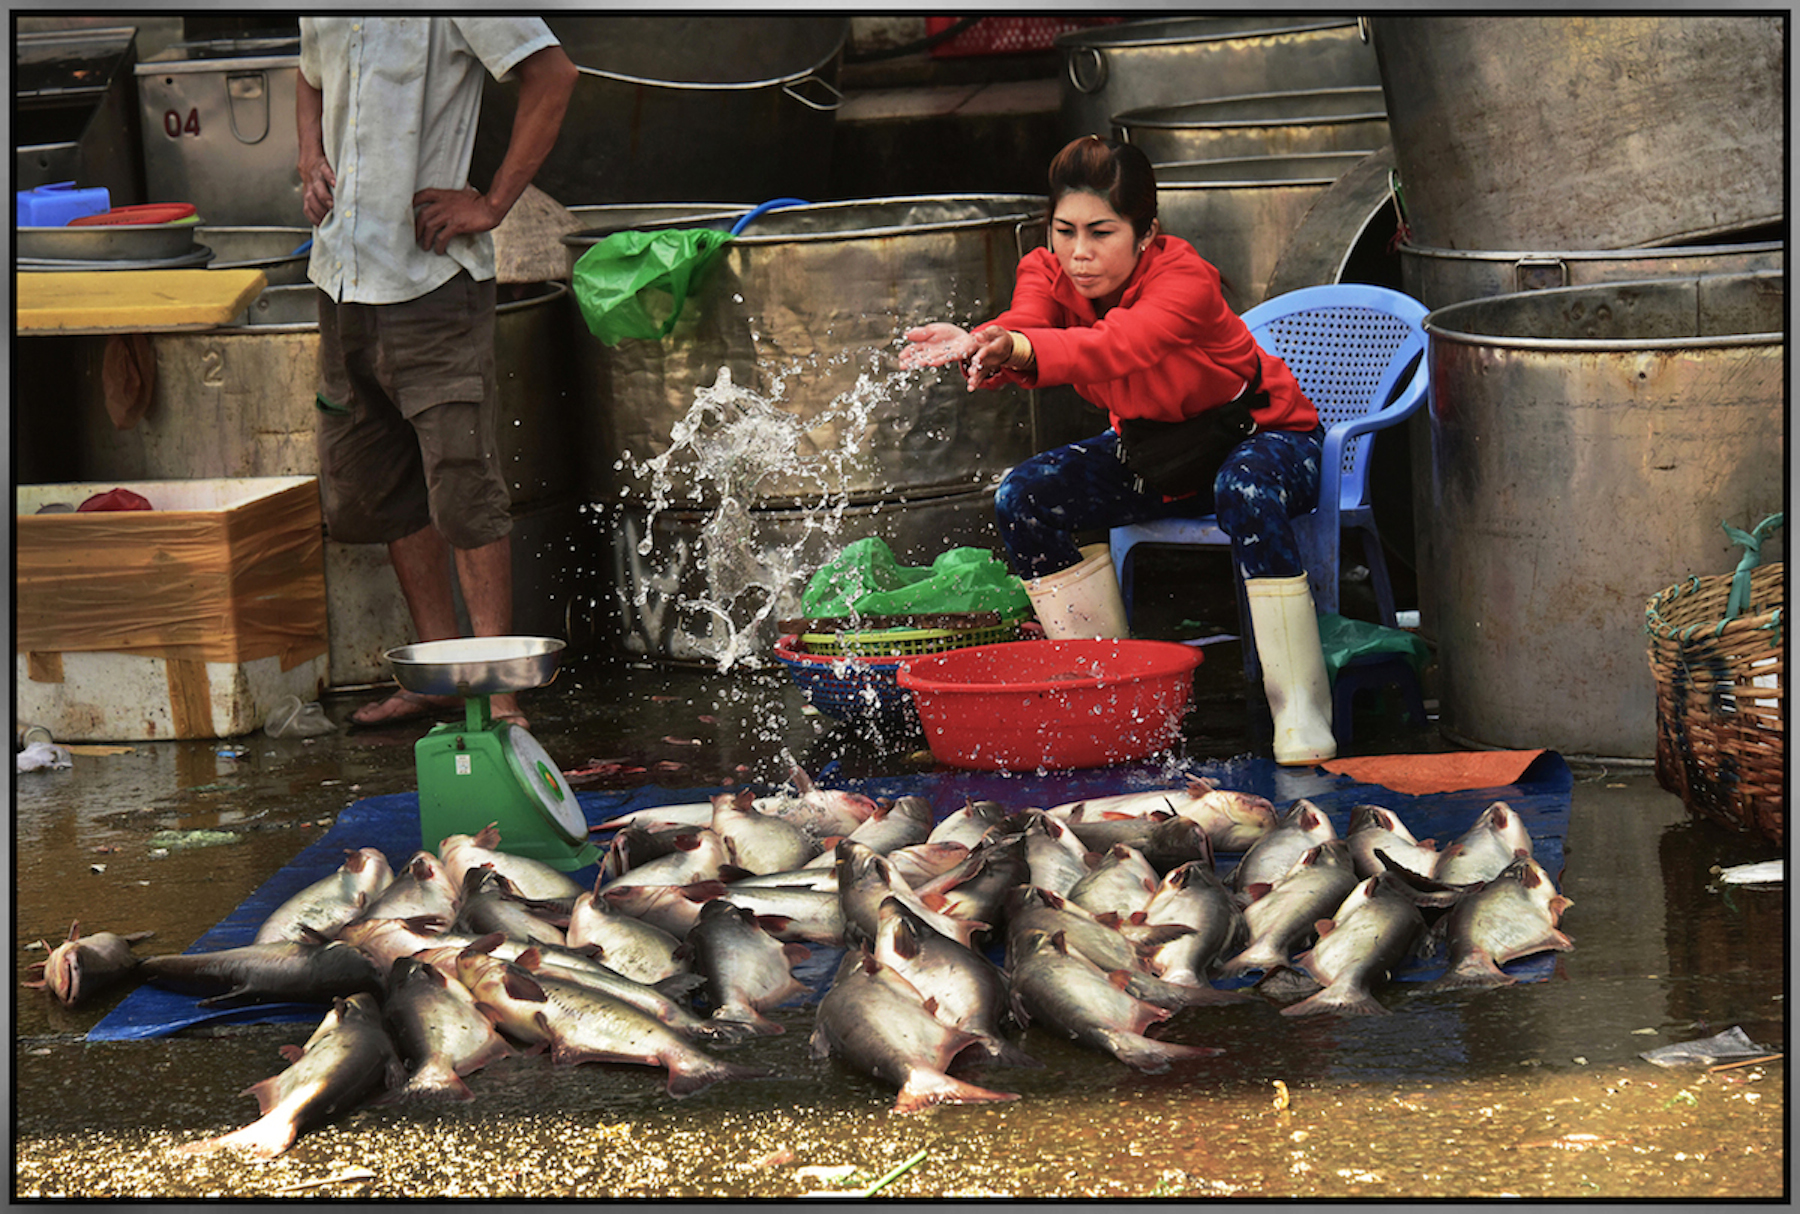  Merchant displays her fish for sale, on a hot afternoon, 105 degrees F. Binh Diem Market, Saigon/HCMC, Dec. 2015.&nbsp;#7814&nbsp; 